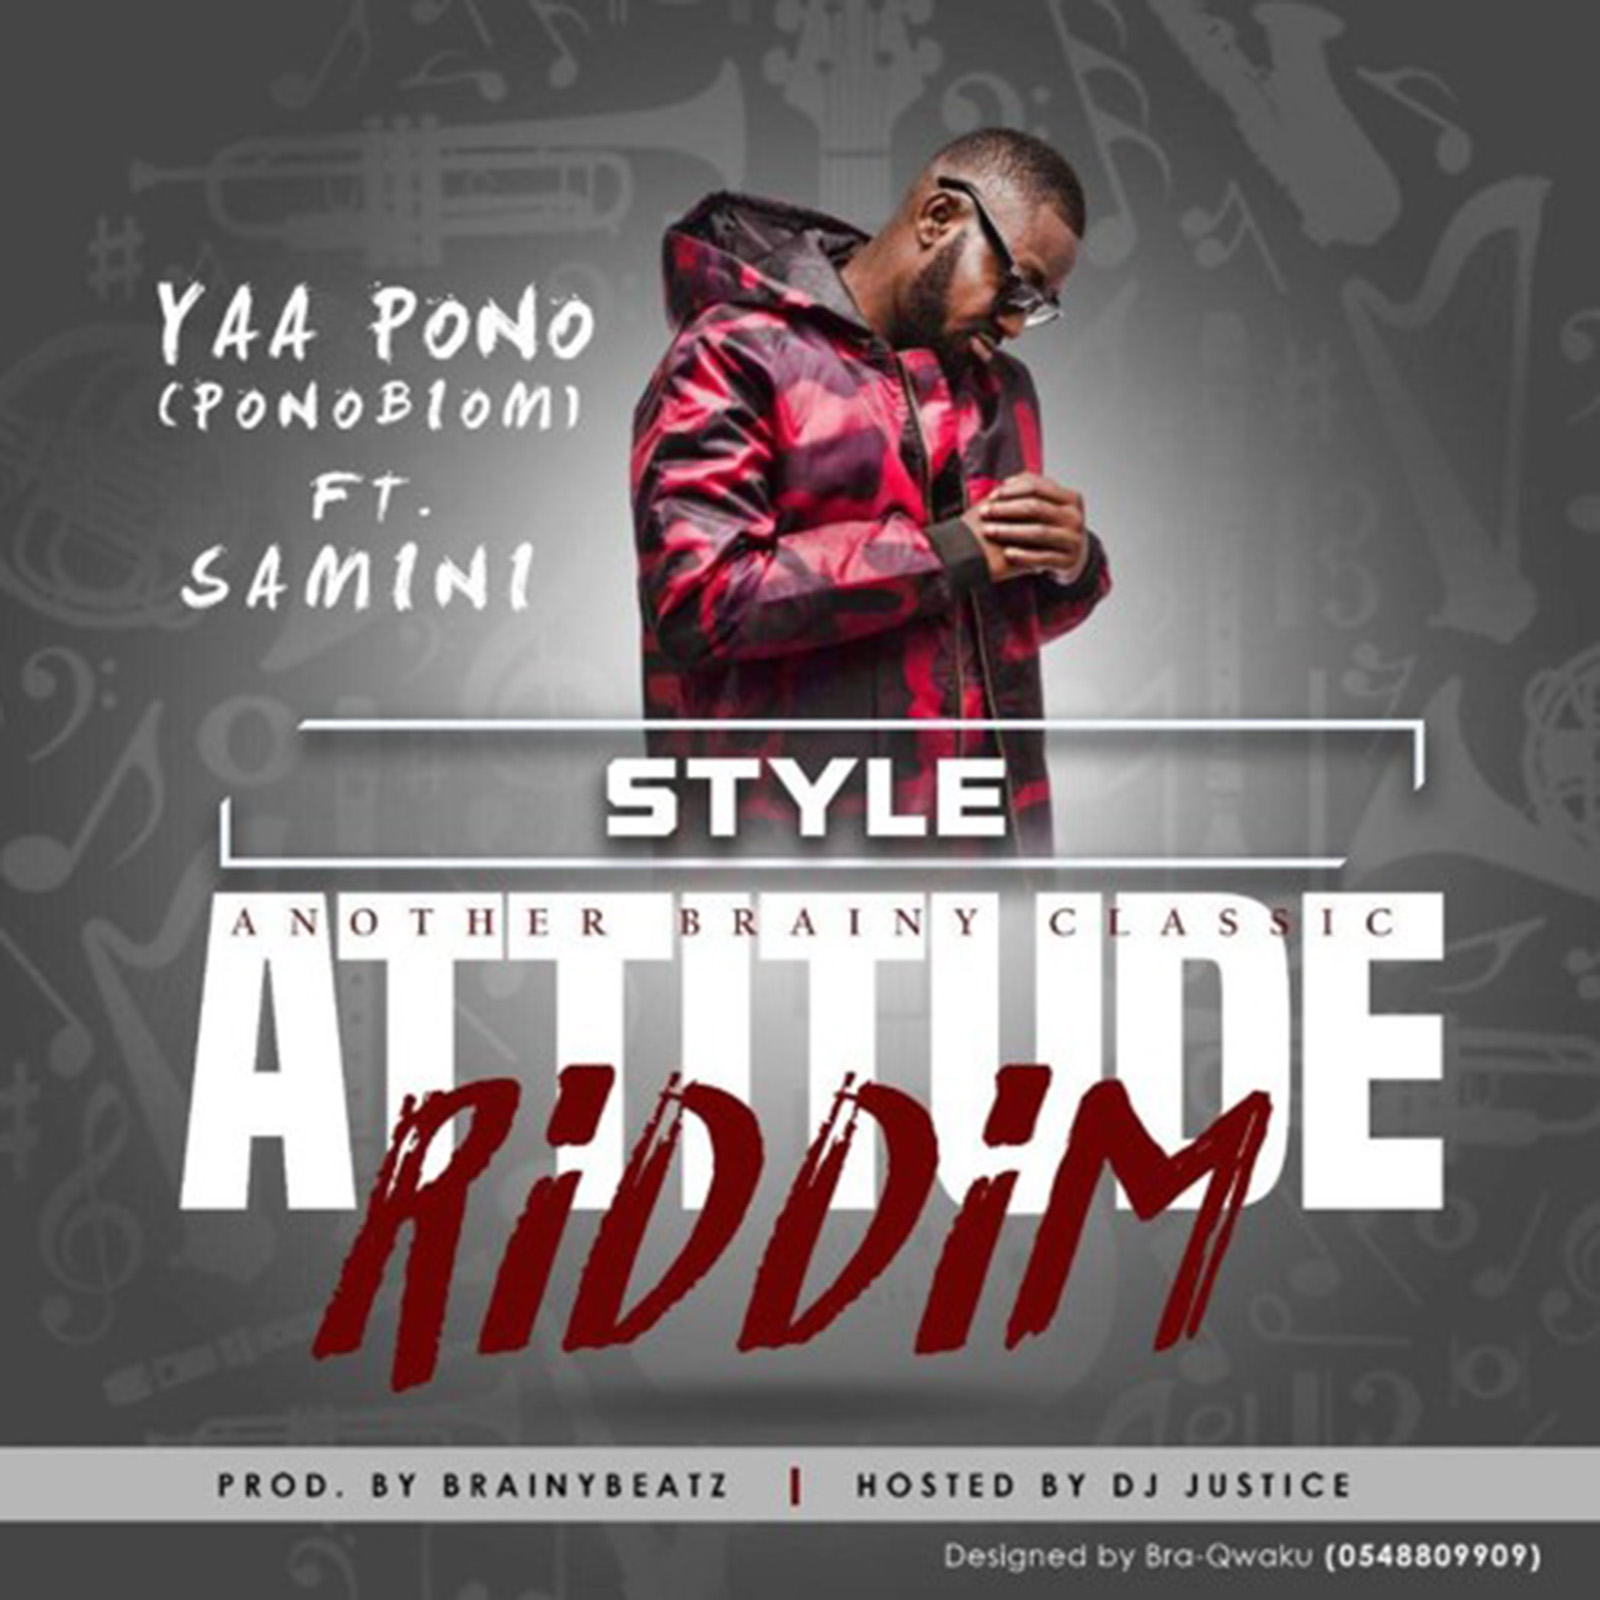 Style (Attitude Riddim) by Yaa Pono feat. Samini